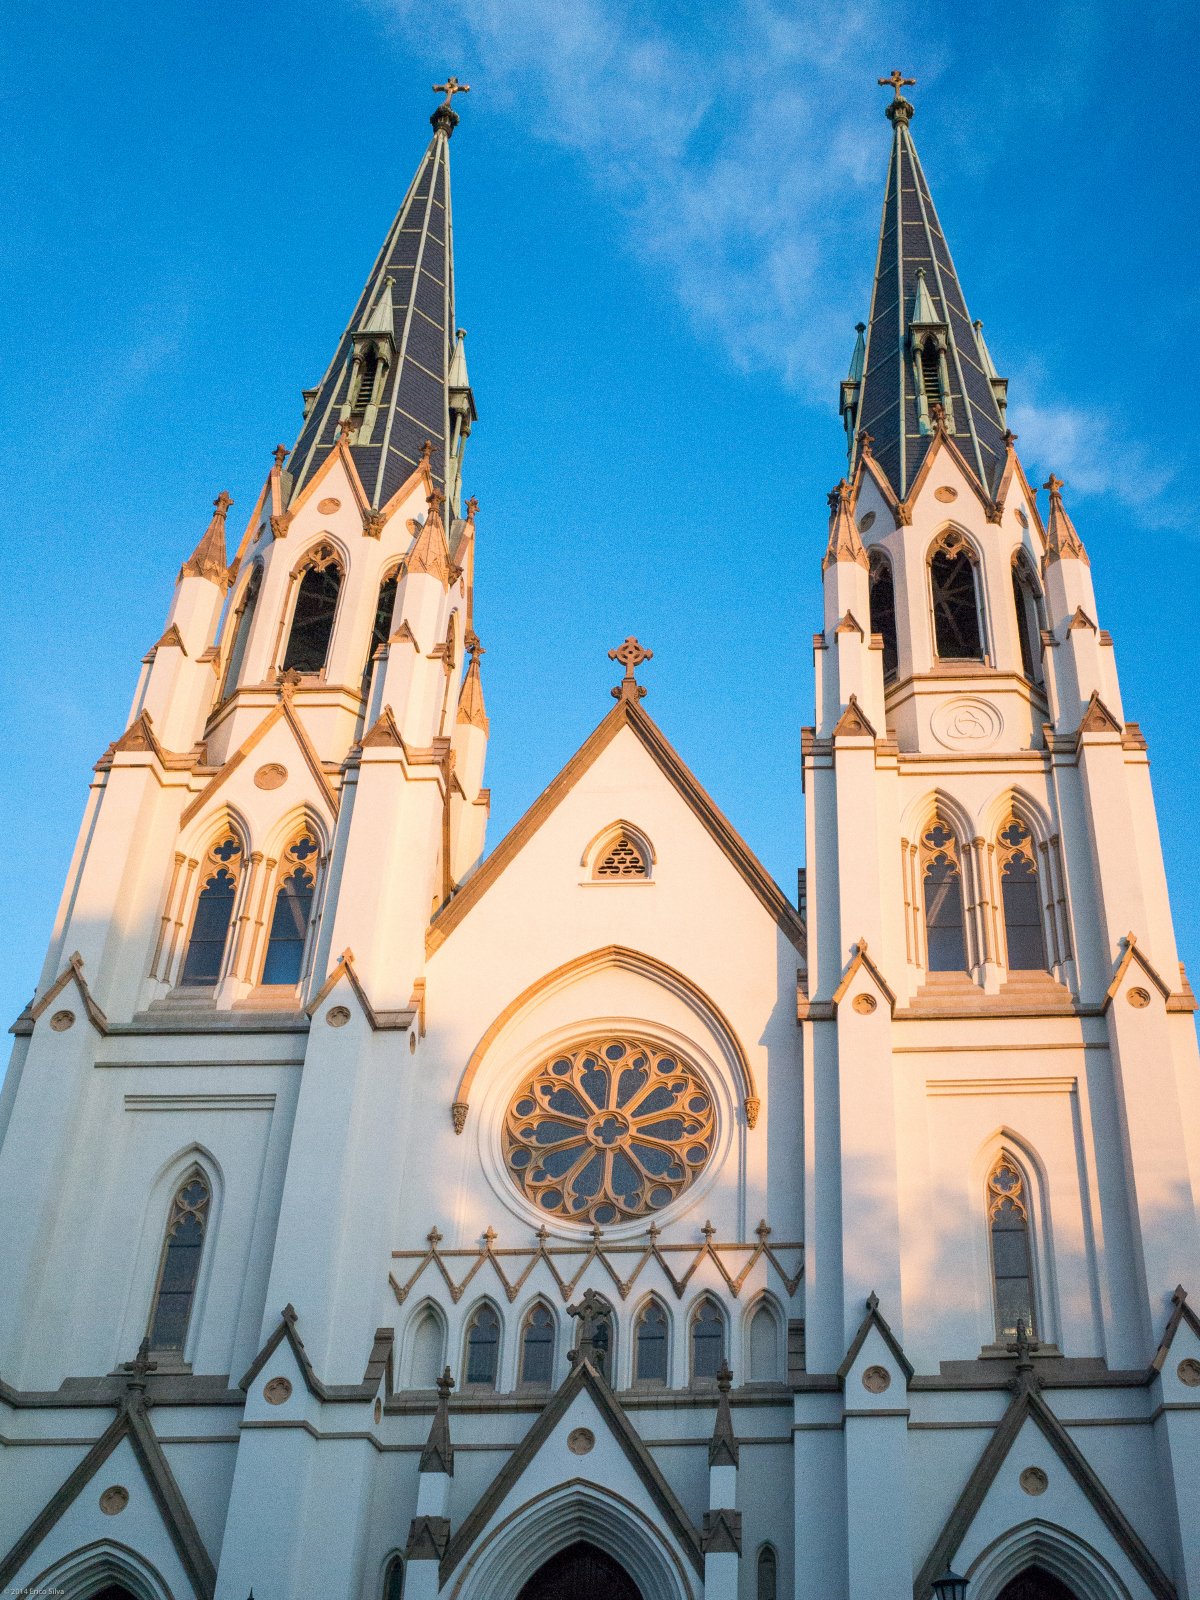 9. Cathedral of St. John the Baptist, Savannah, Georgia 